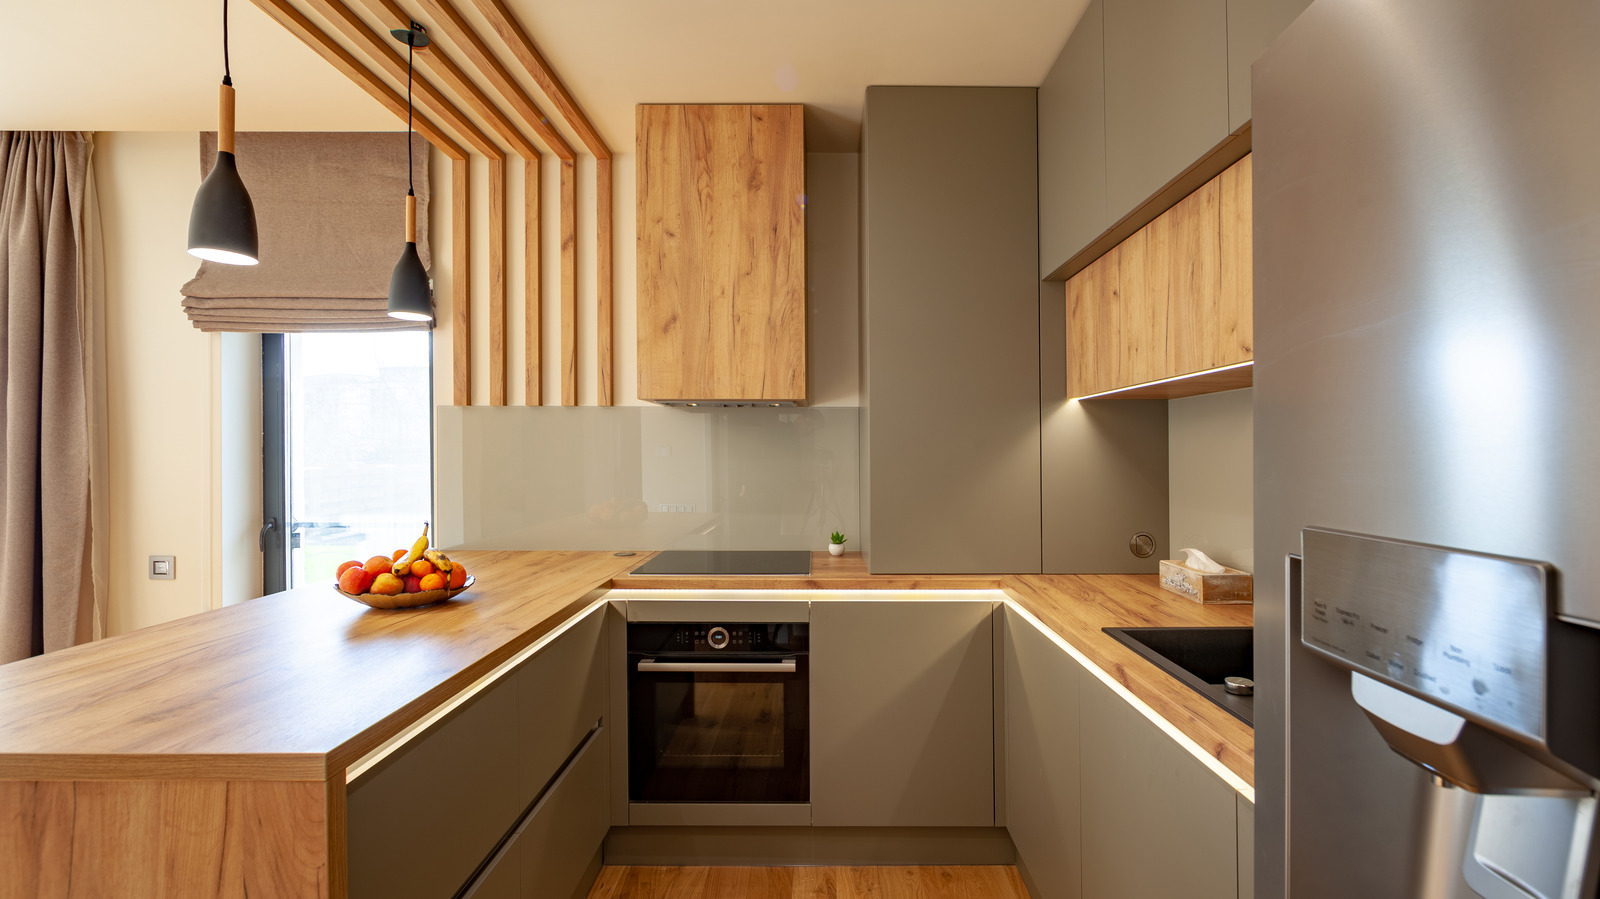 Unique Kitchen Designs Perfect for Your Home